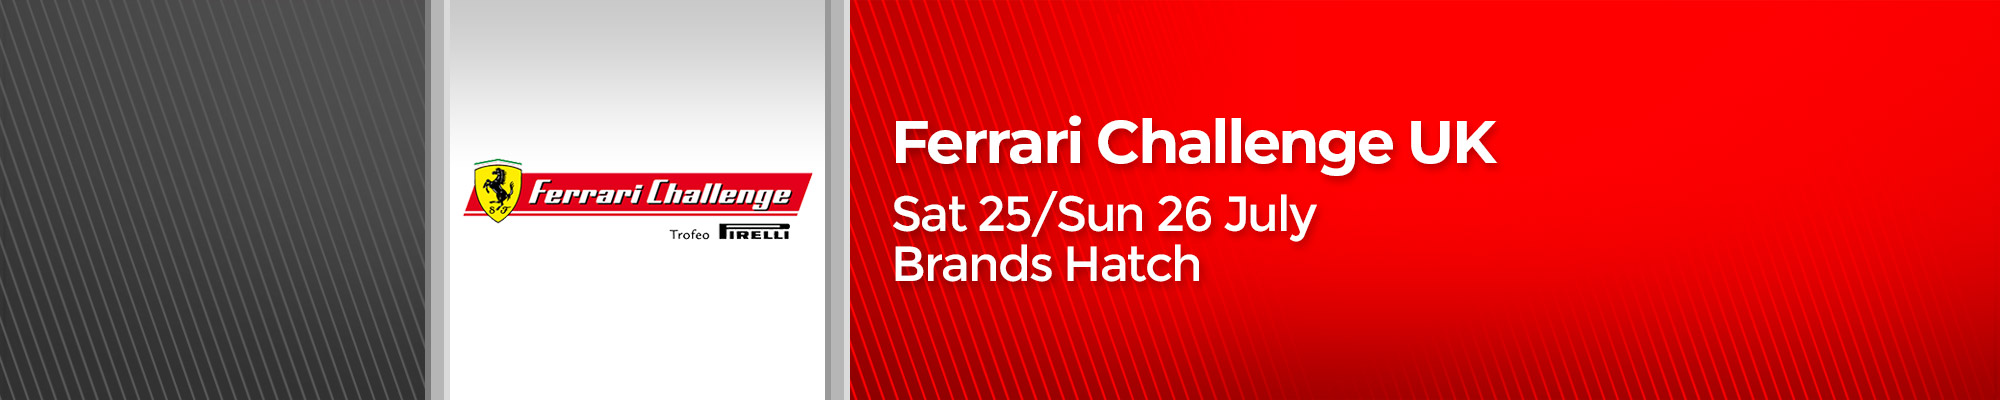 Ferrari Challenge UK